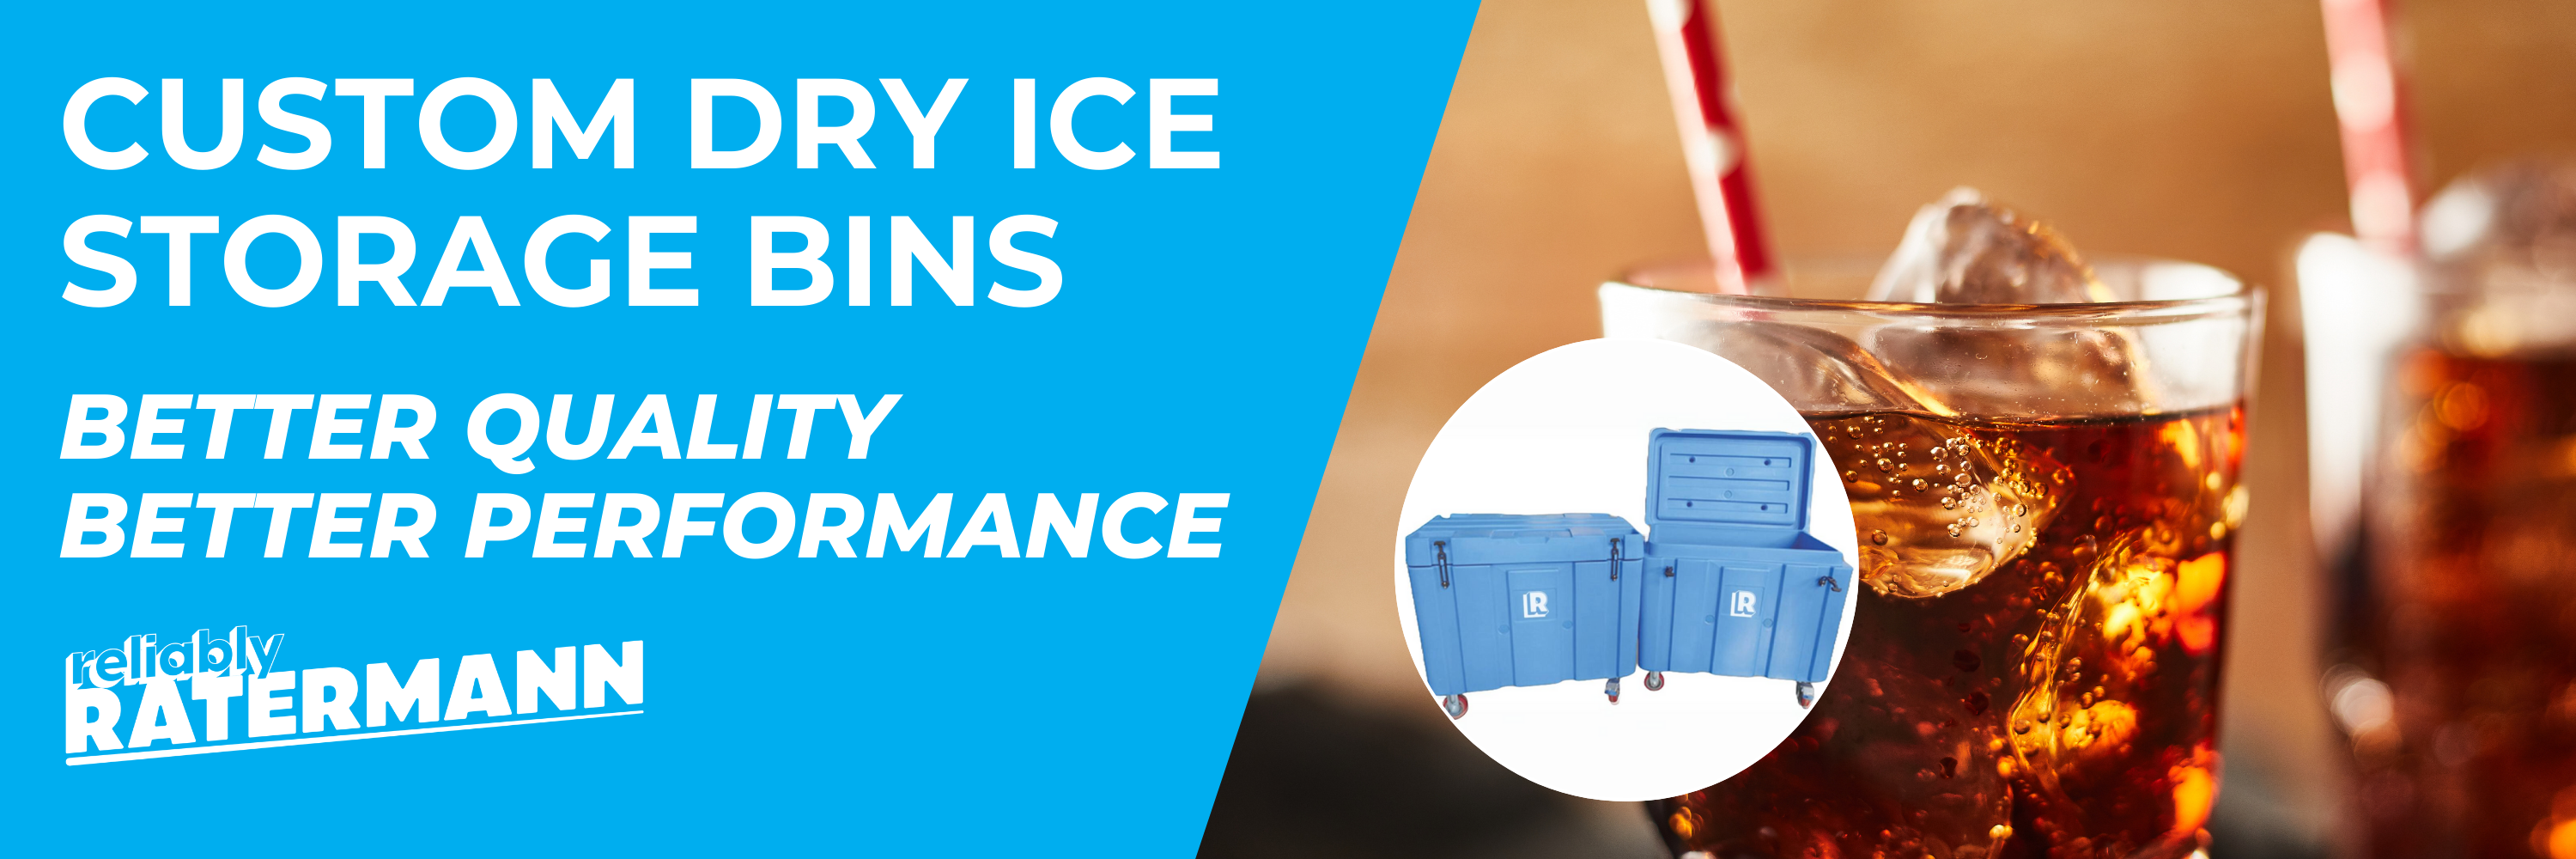 Custom Dry Ice Storage Bins